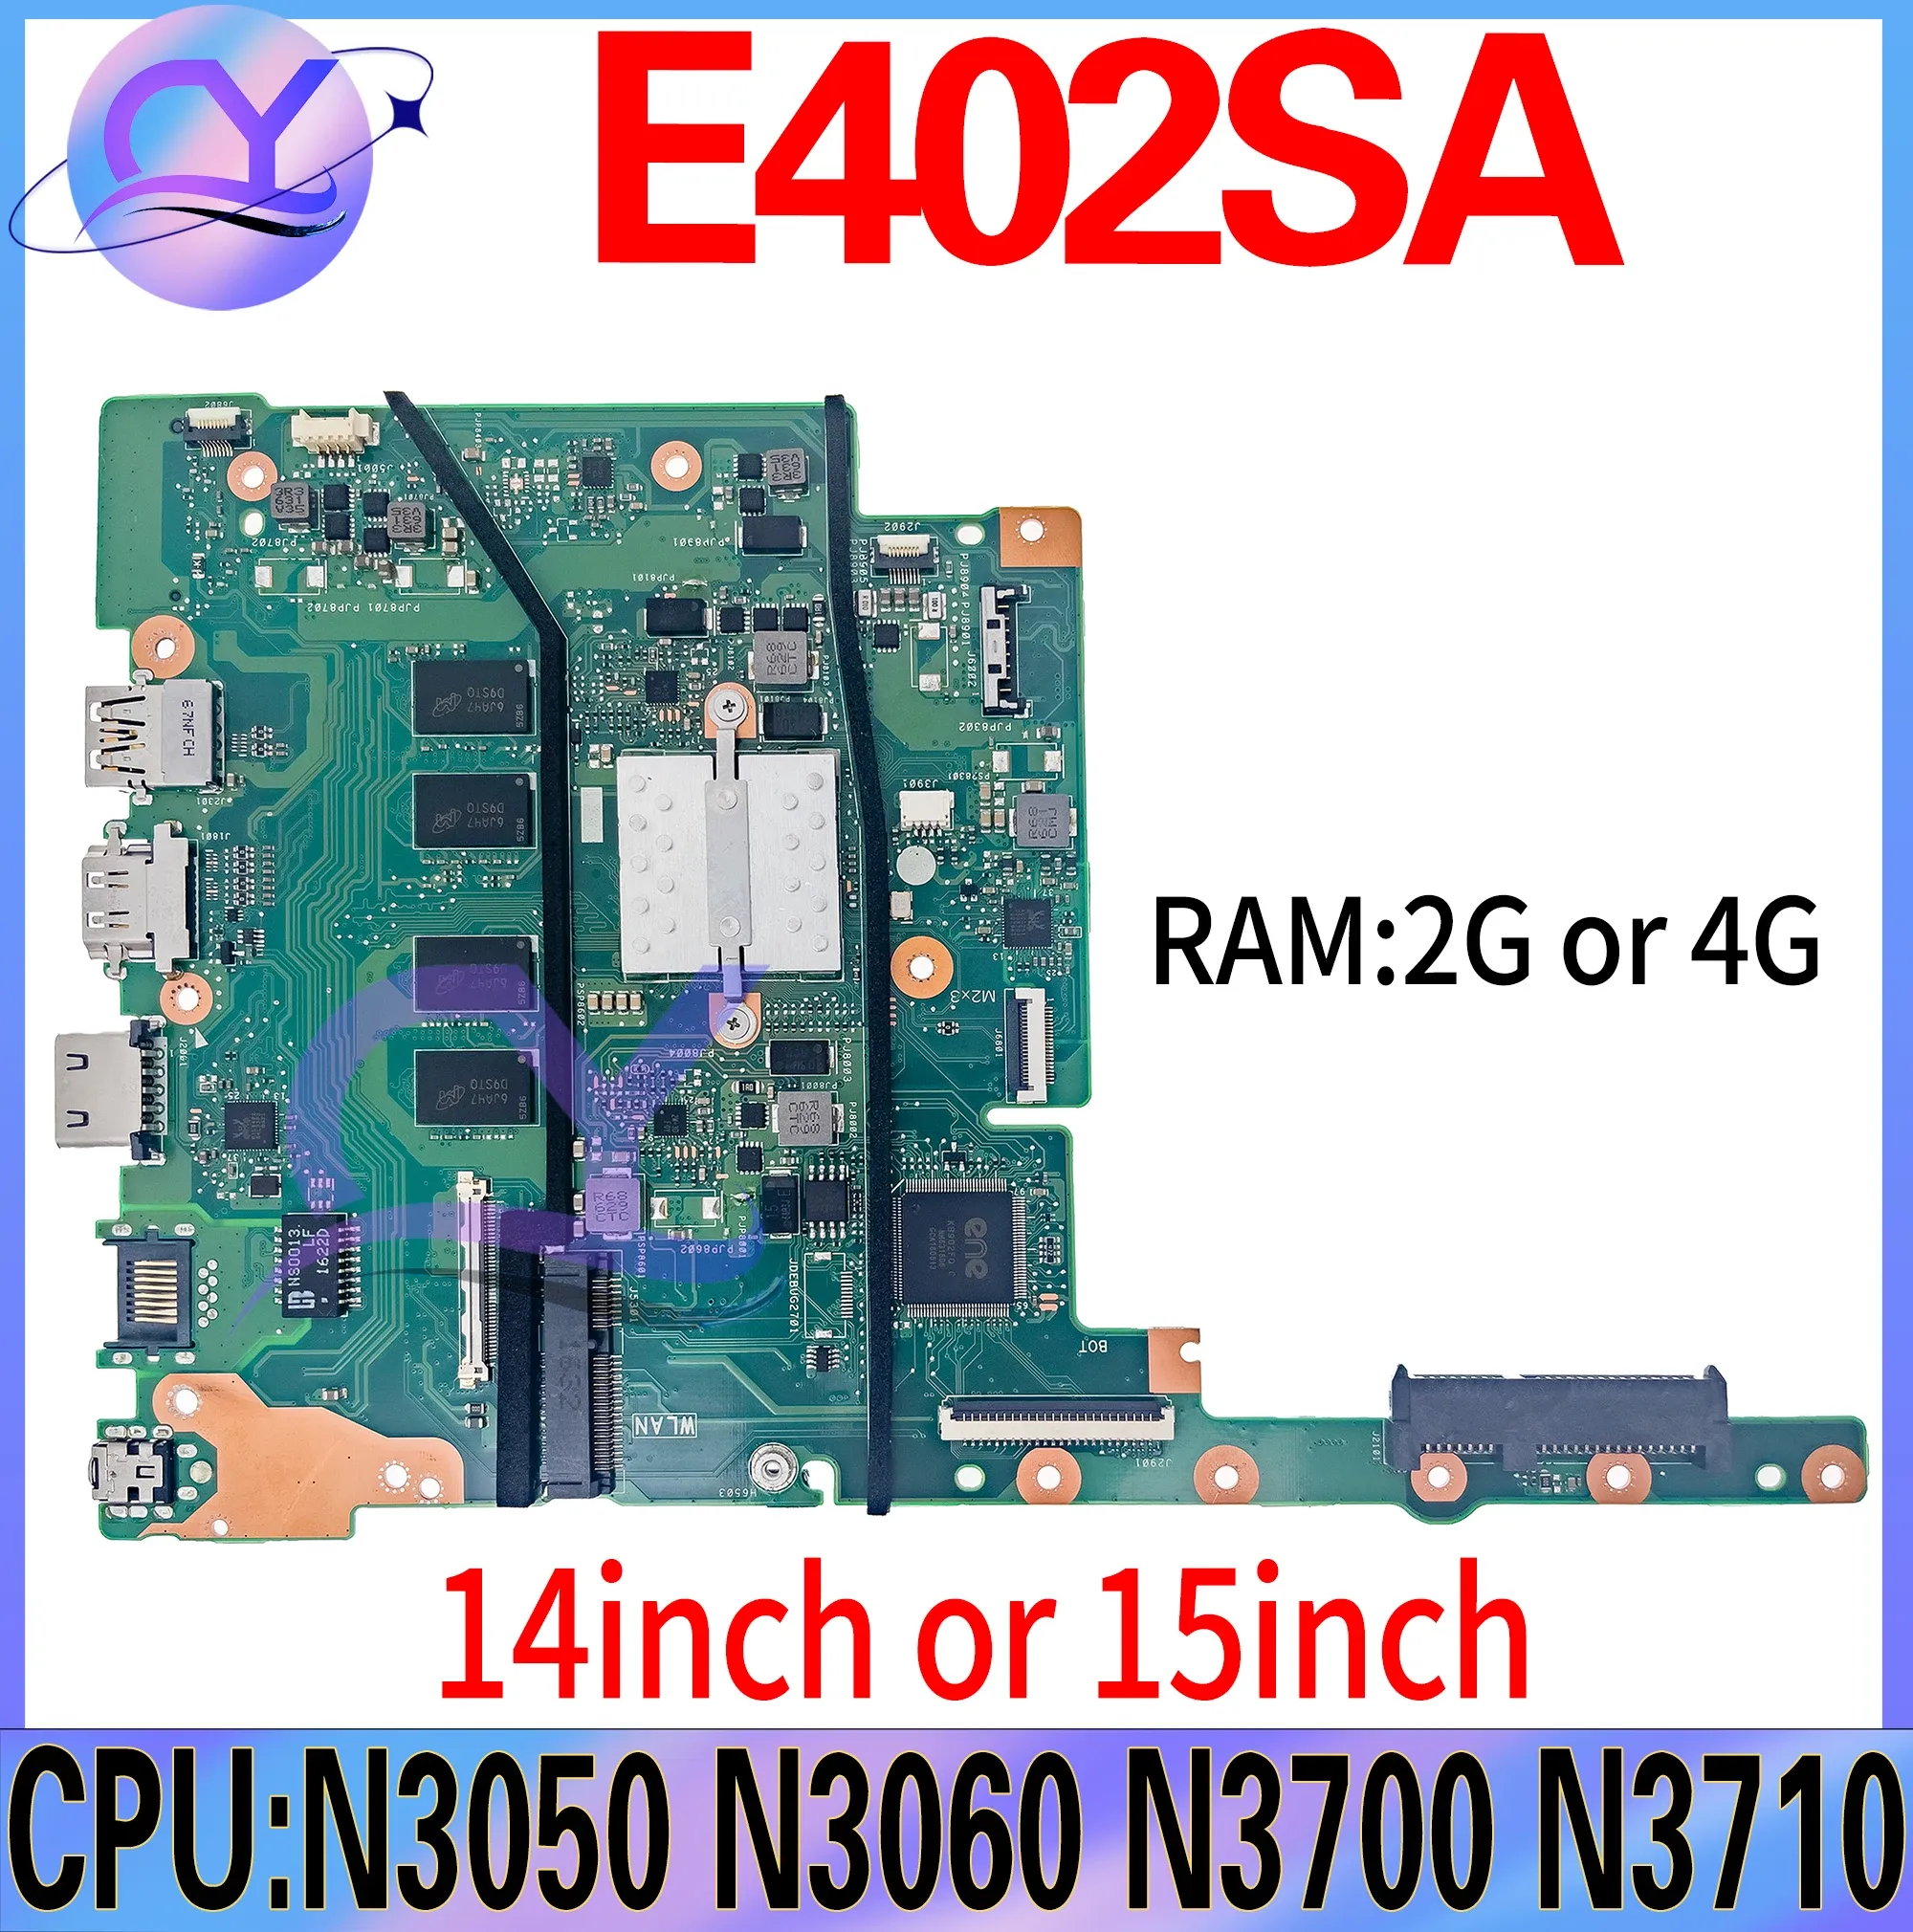 Motherboard E402SA Notebook Mainboard For ASUS E402SA E402S E502SA E502S Laptop Motherboard N3050/3060 N3700/3710 2G/4G 100% Working